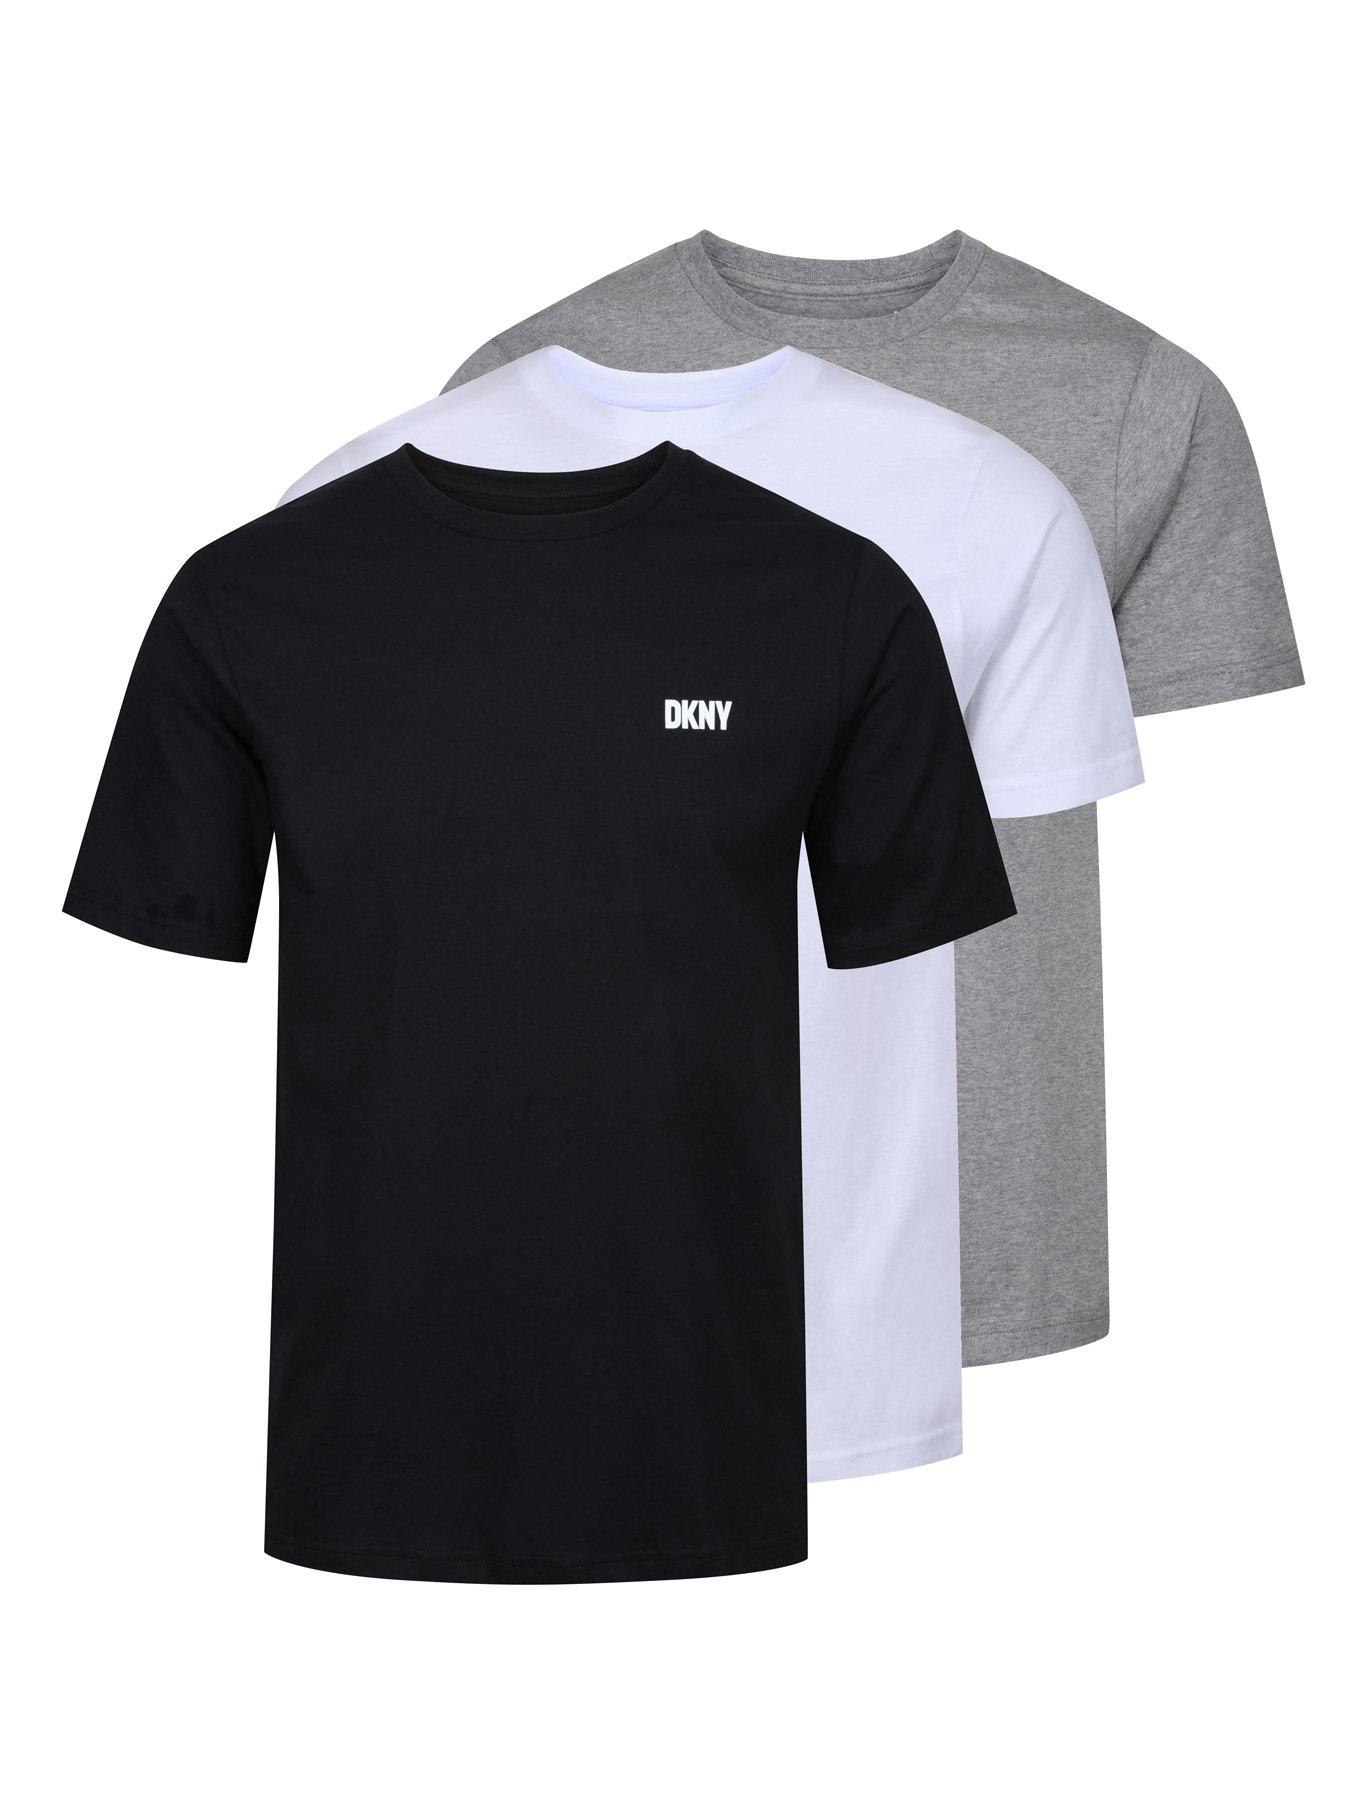 DKNY Giants Pack Ireland 3 T-shirt | Multi - Very